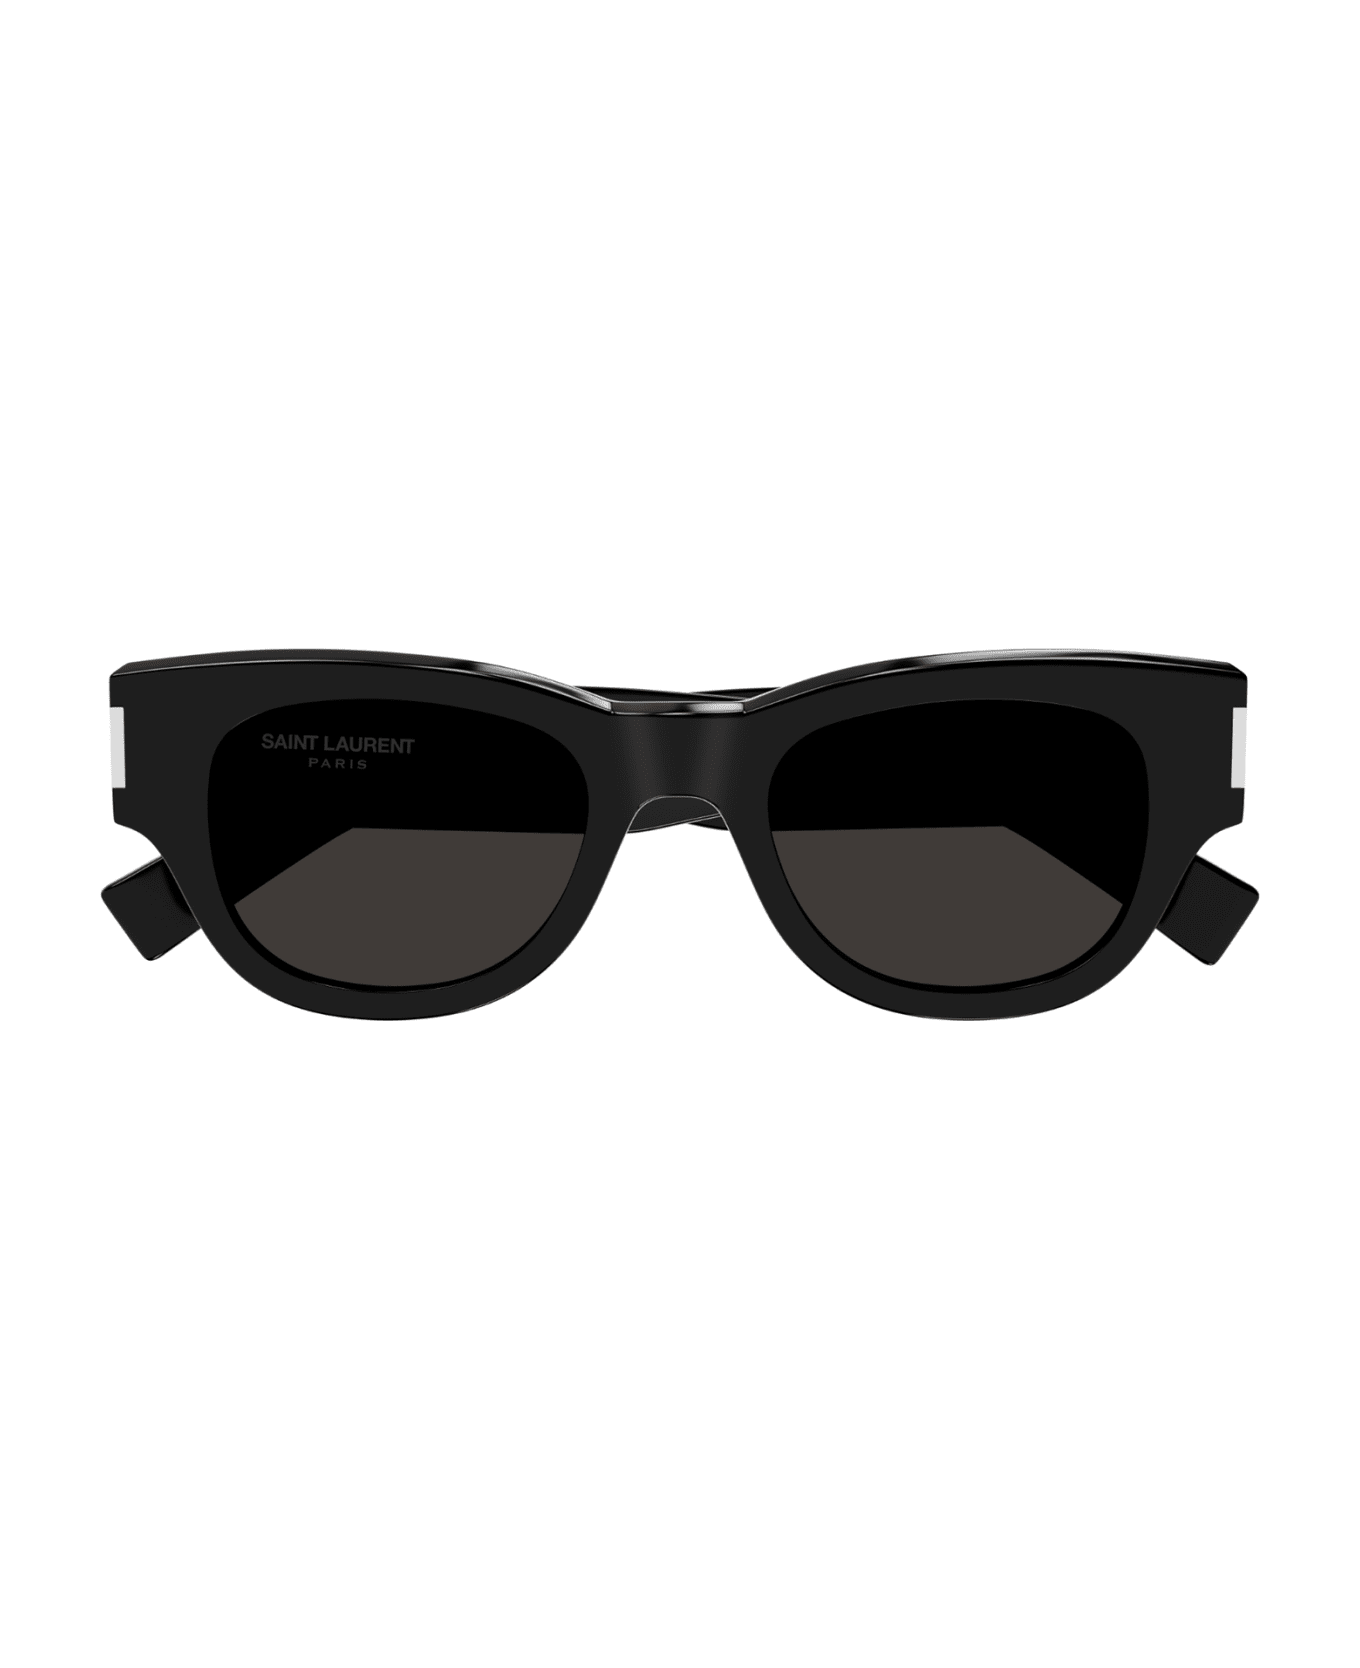 Saint Laurent Eyewear SL 573 Sunglasses - Black Crystal Grey